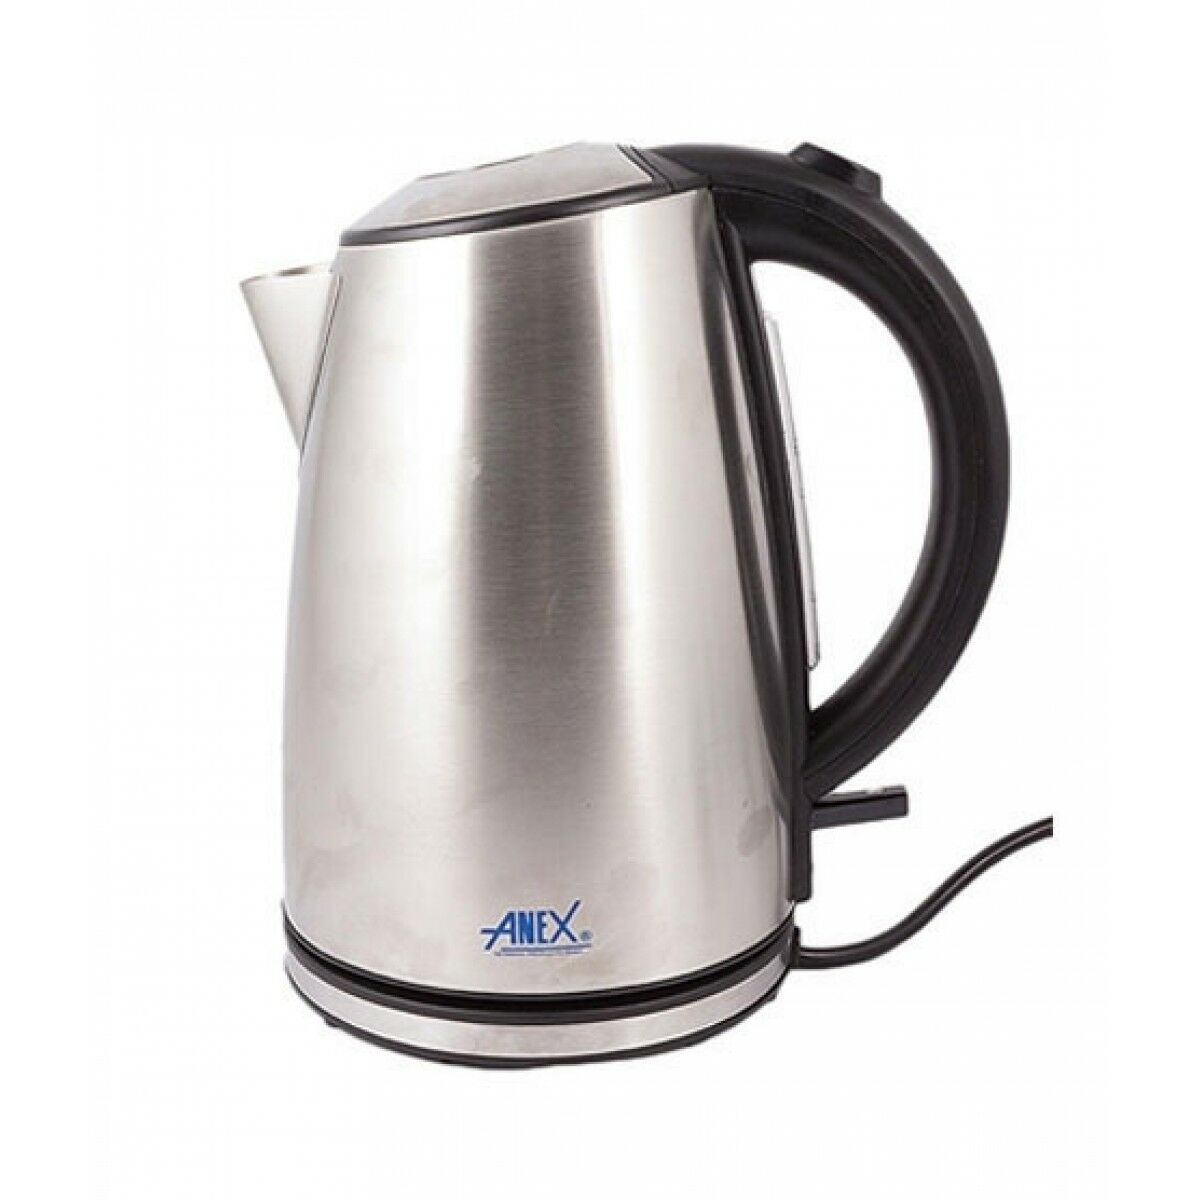 Anex Kitchen Appliances Kettle - AG 4046 Deluxe